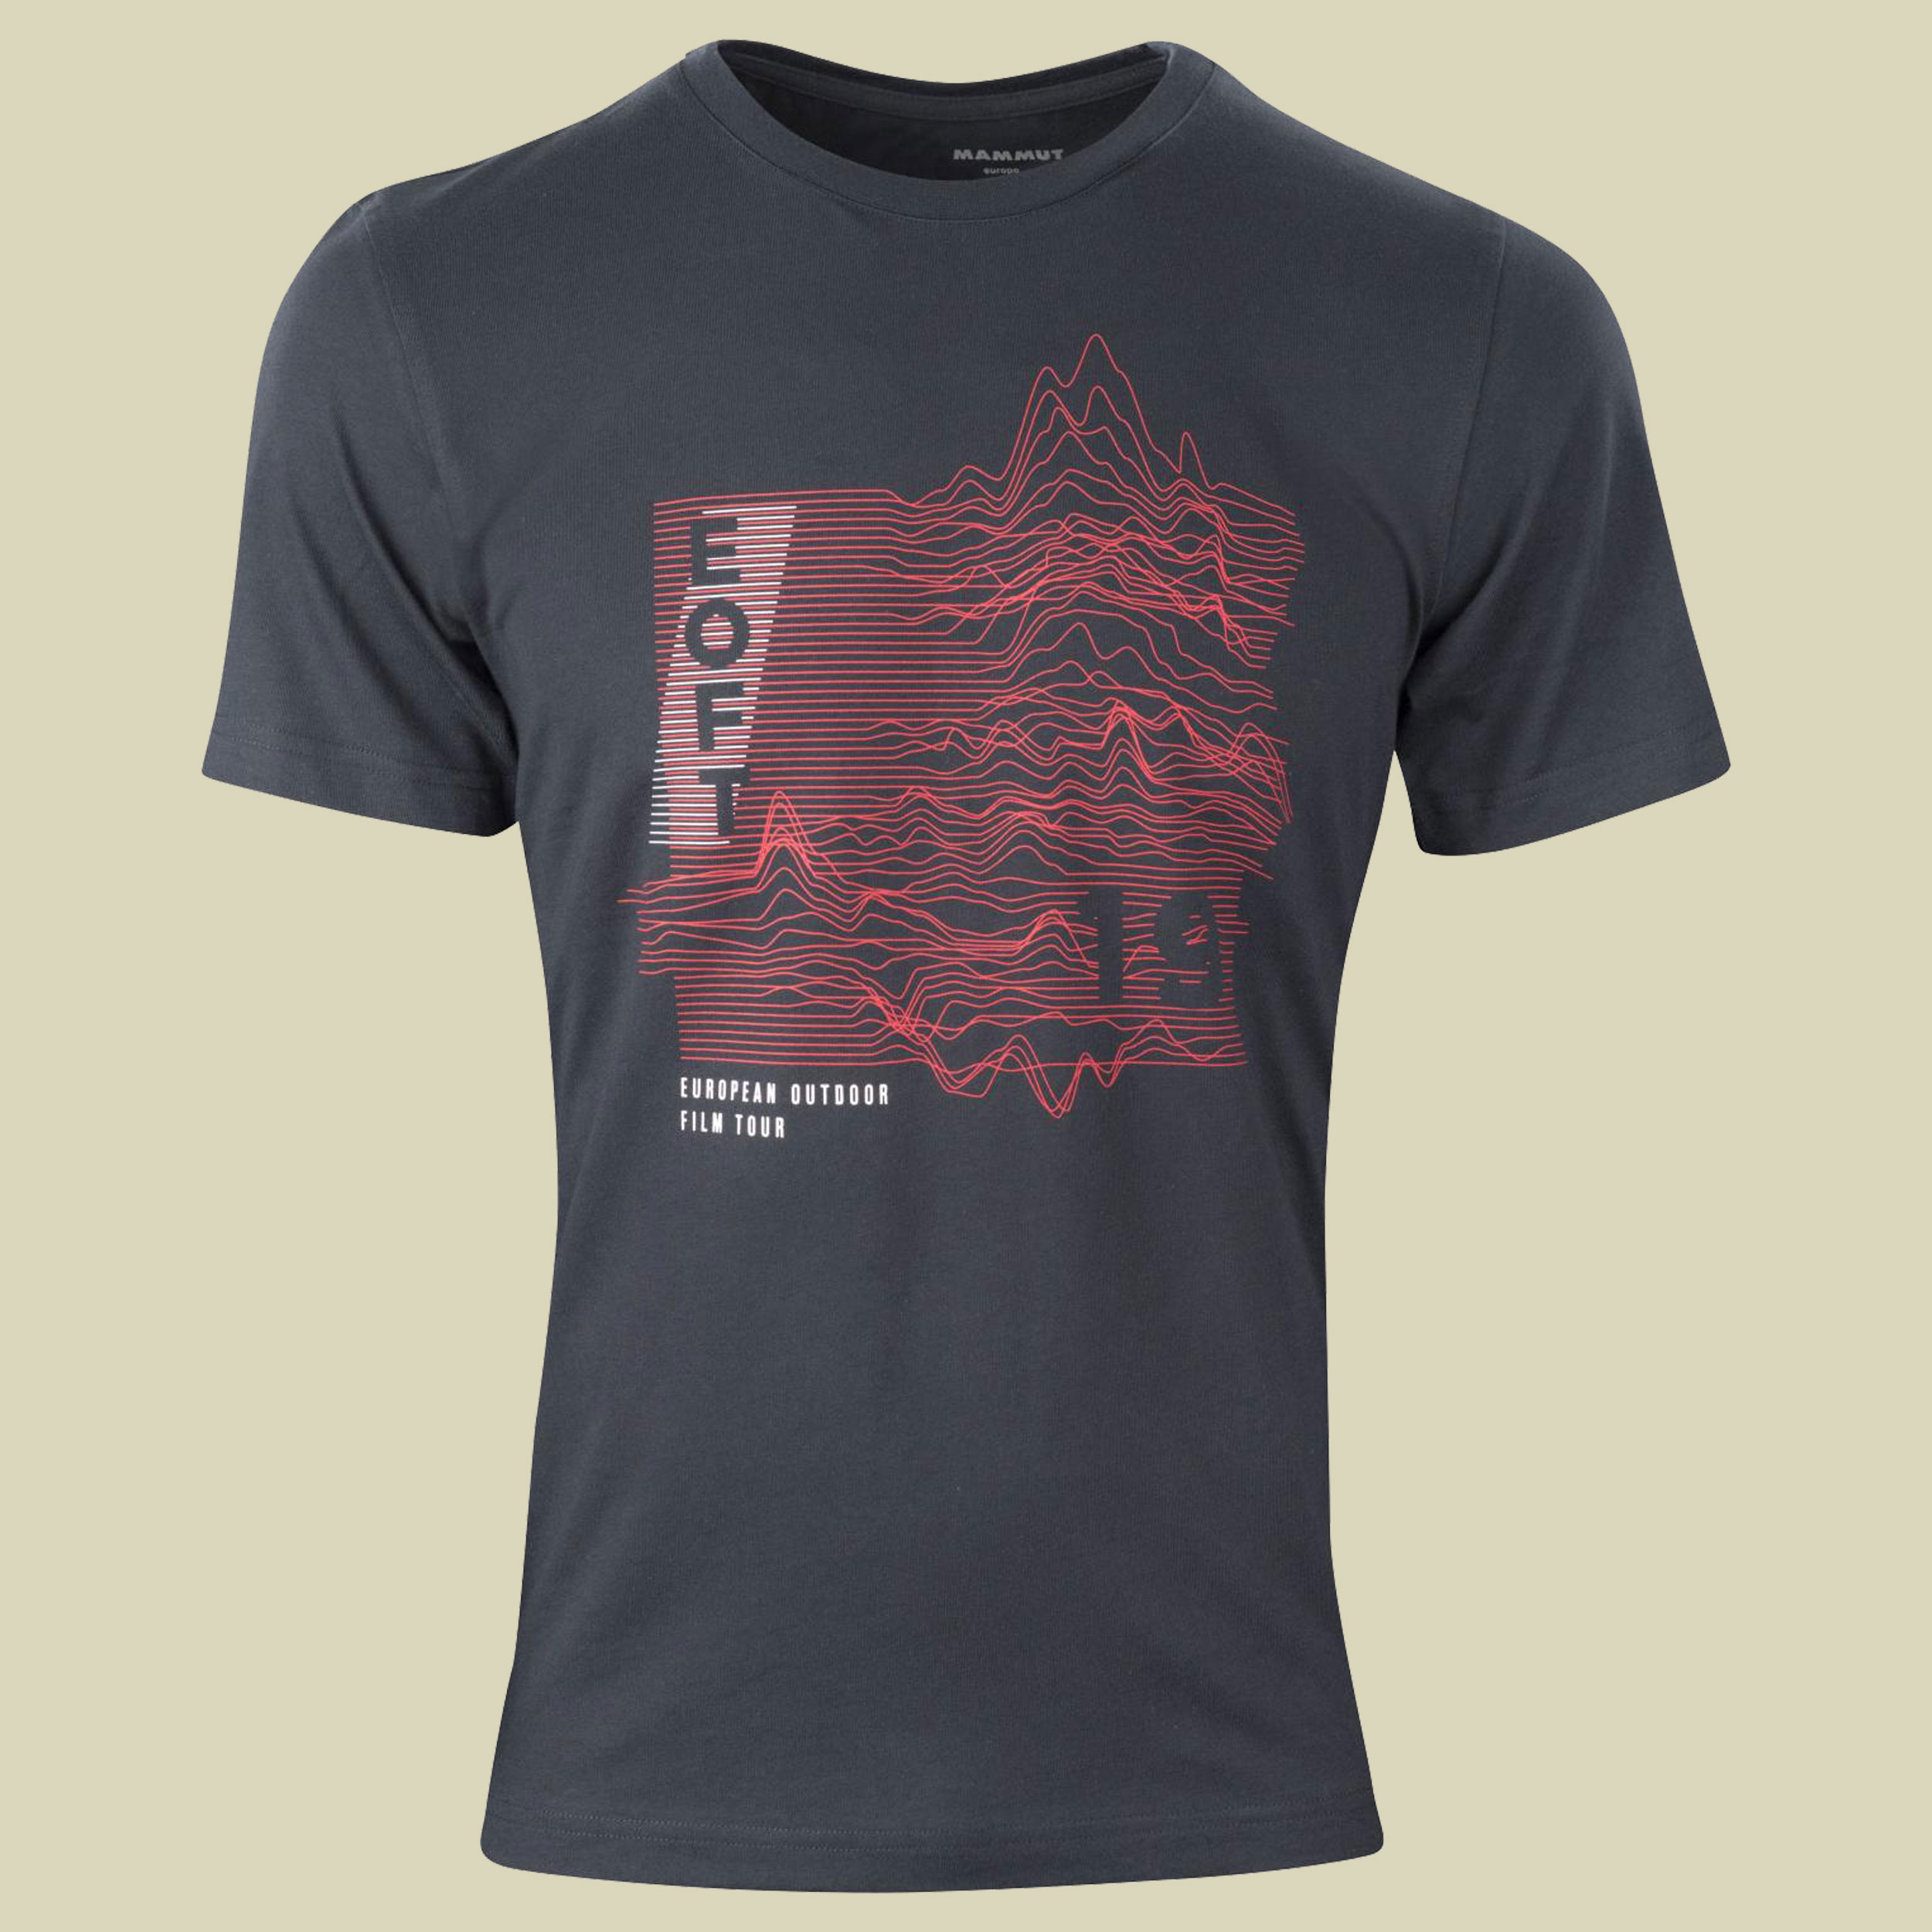 EOFT T-Shirt Men 2019/20 Größe S Farbe black